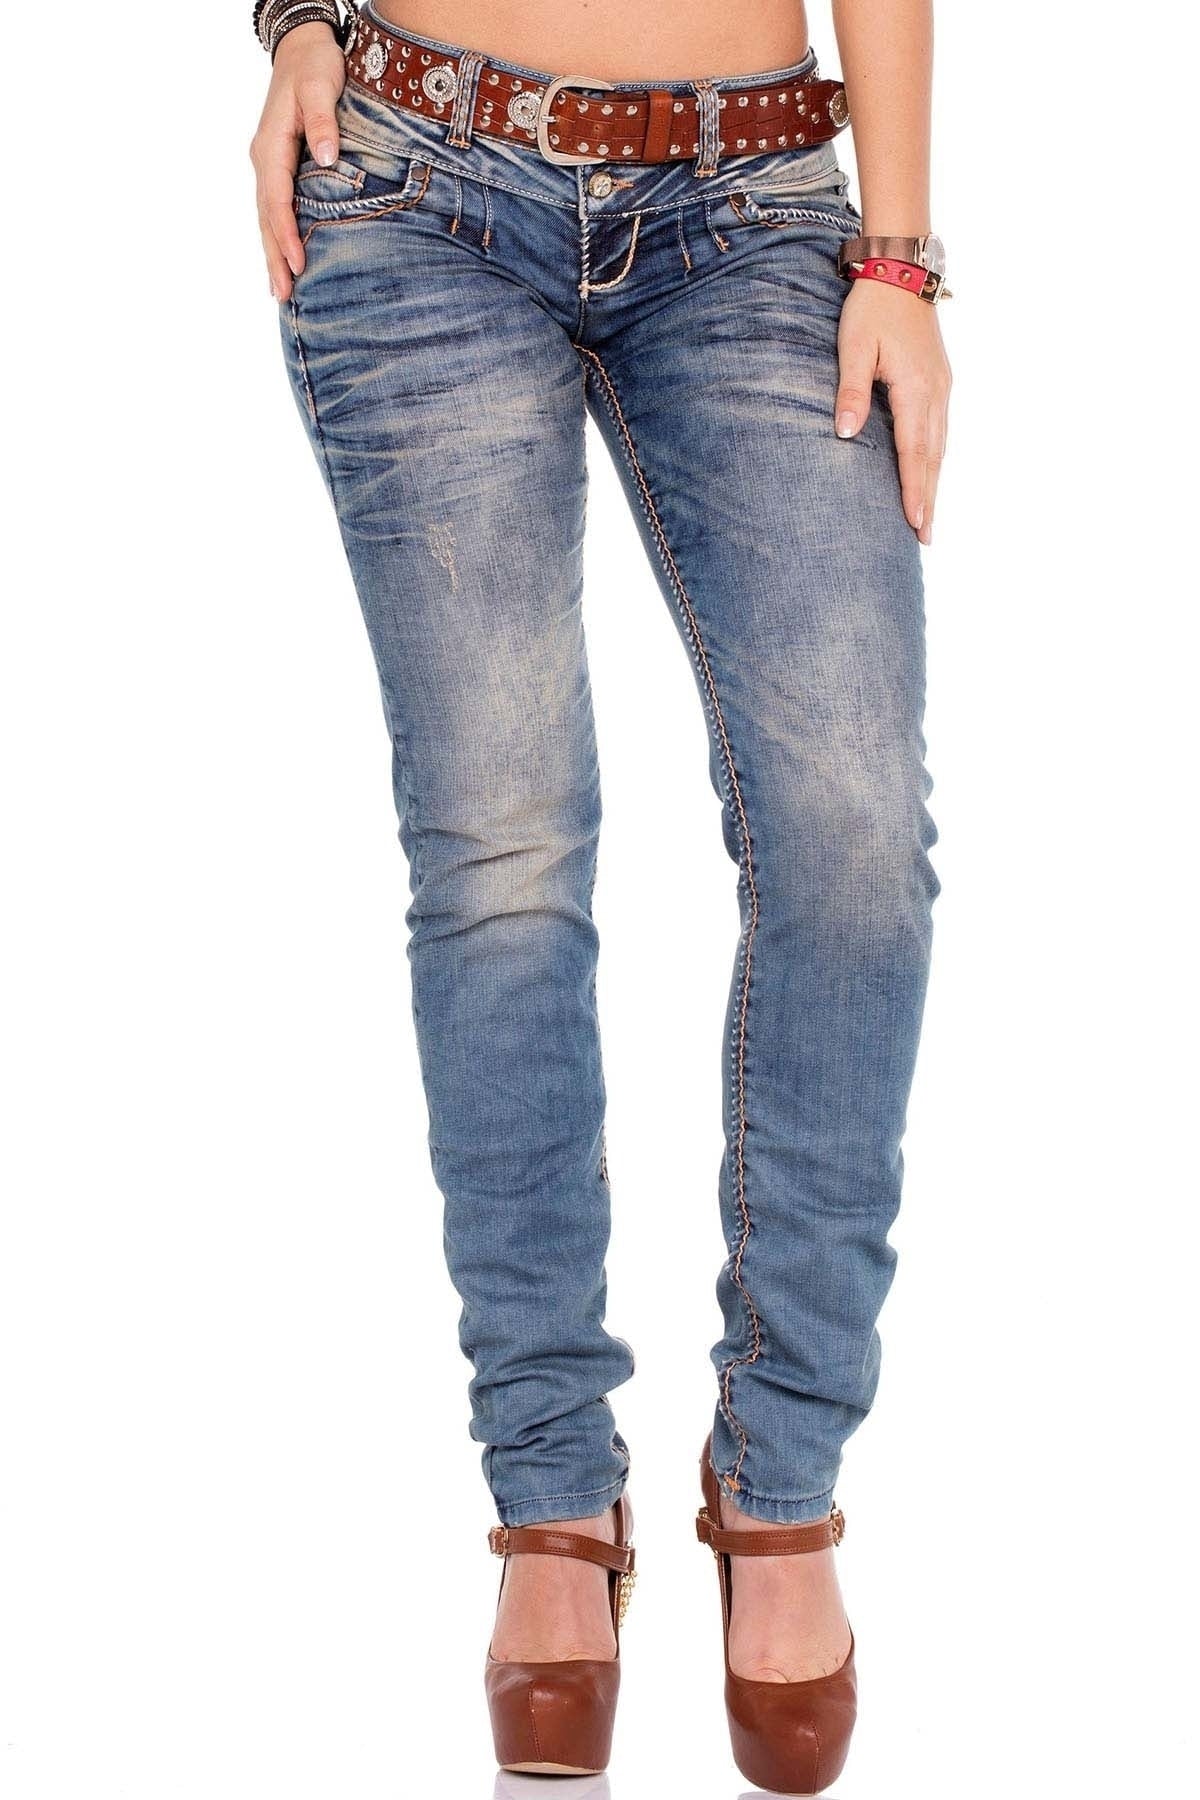 CBW-0347 Damen Jeans  Freizeit Slim Fit 5-Pocket Design Used Kontrastnähte